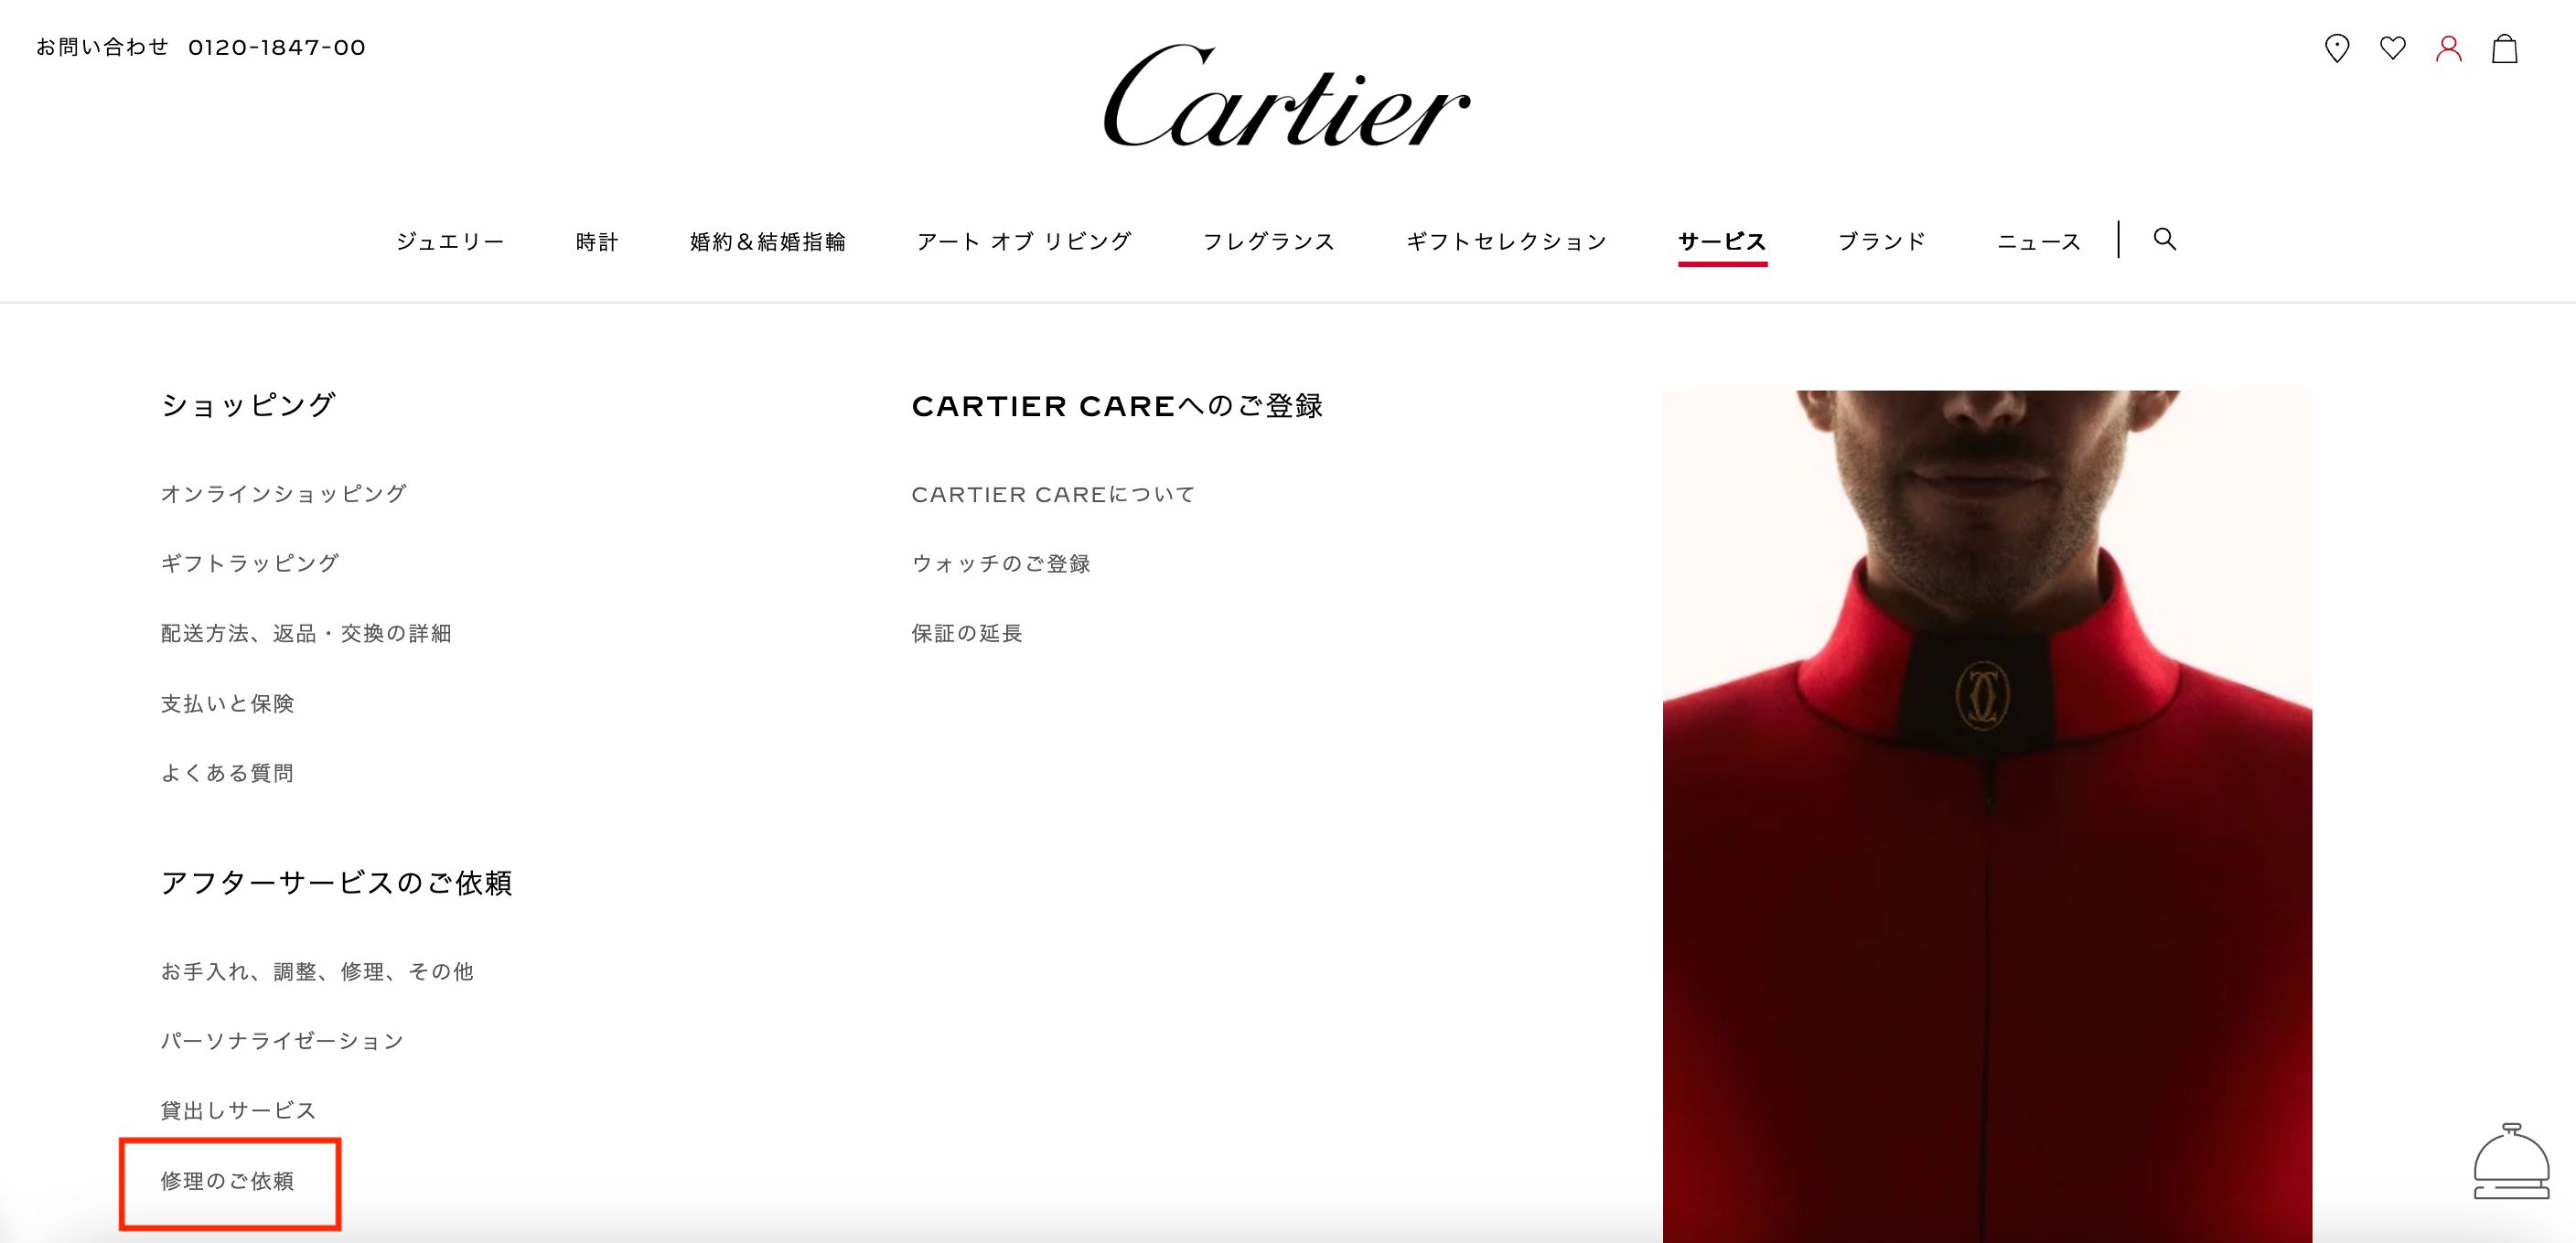 Cartier official website service location